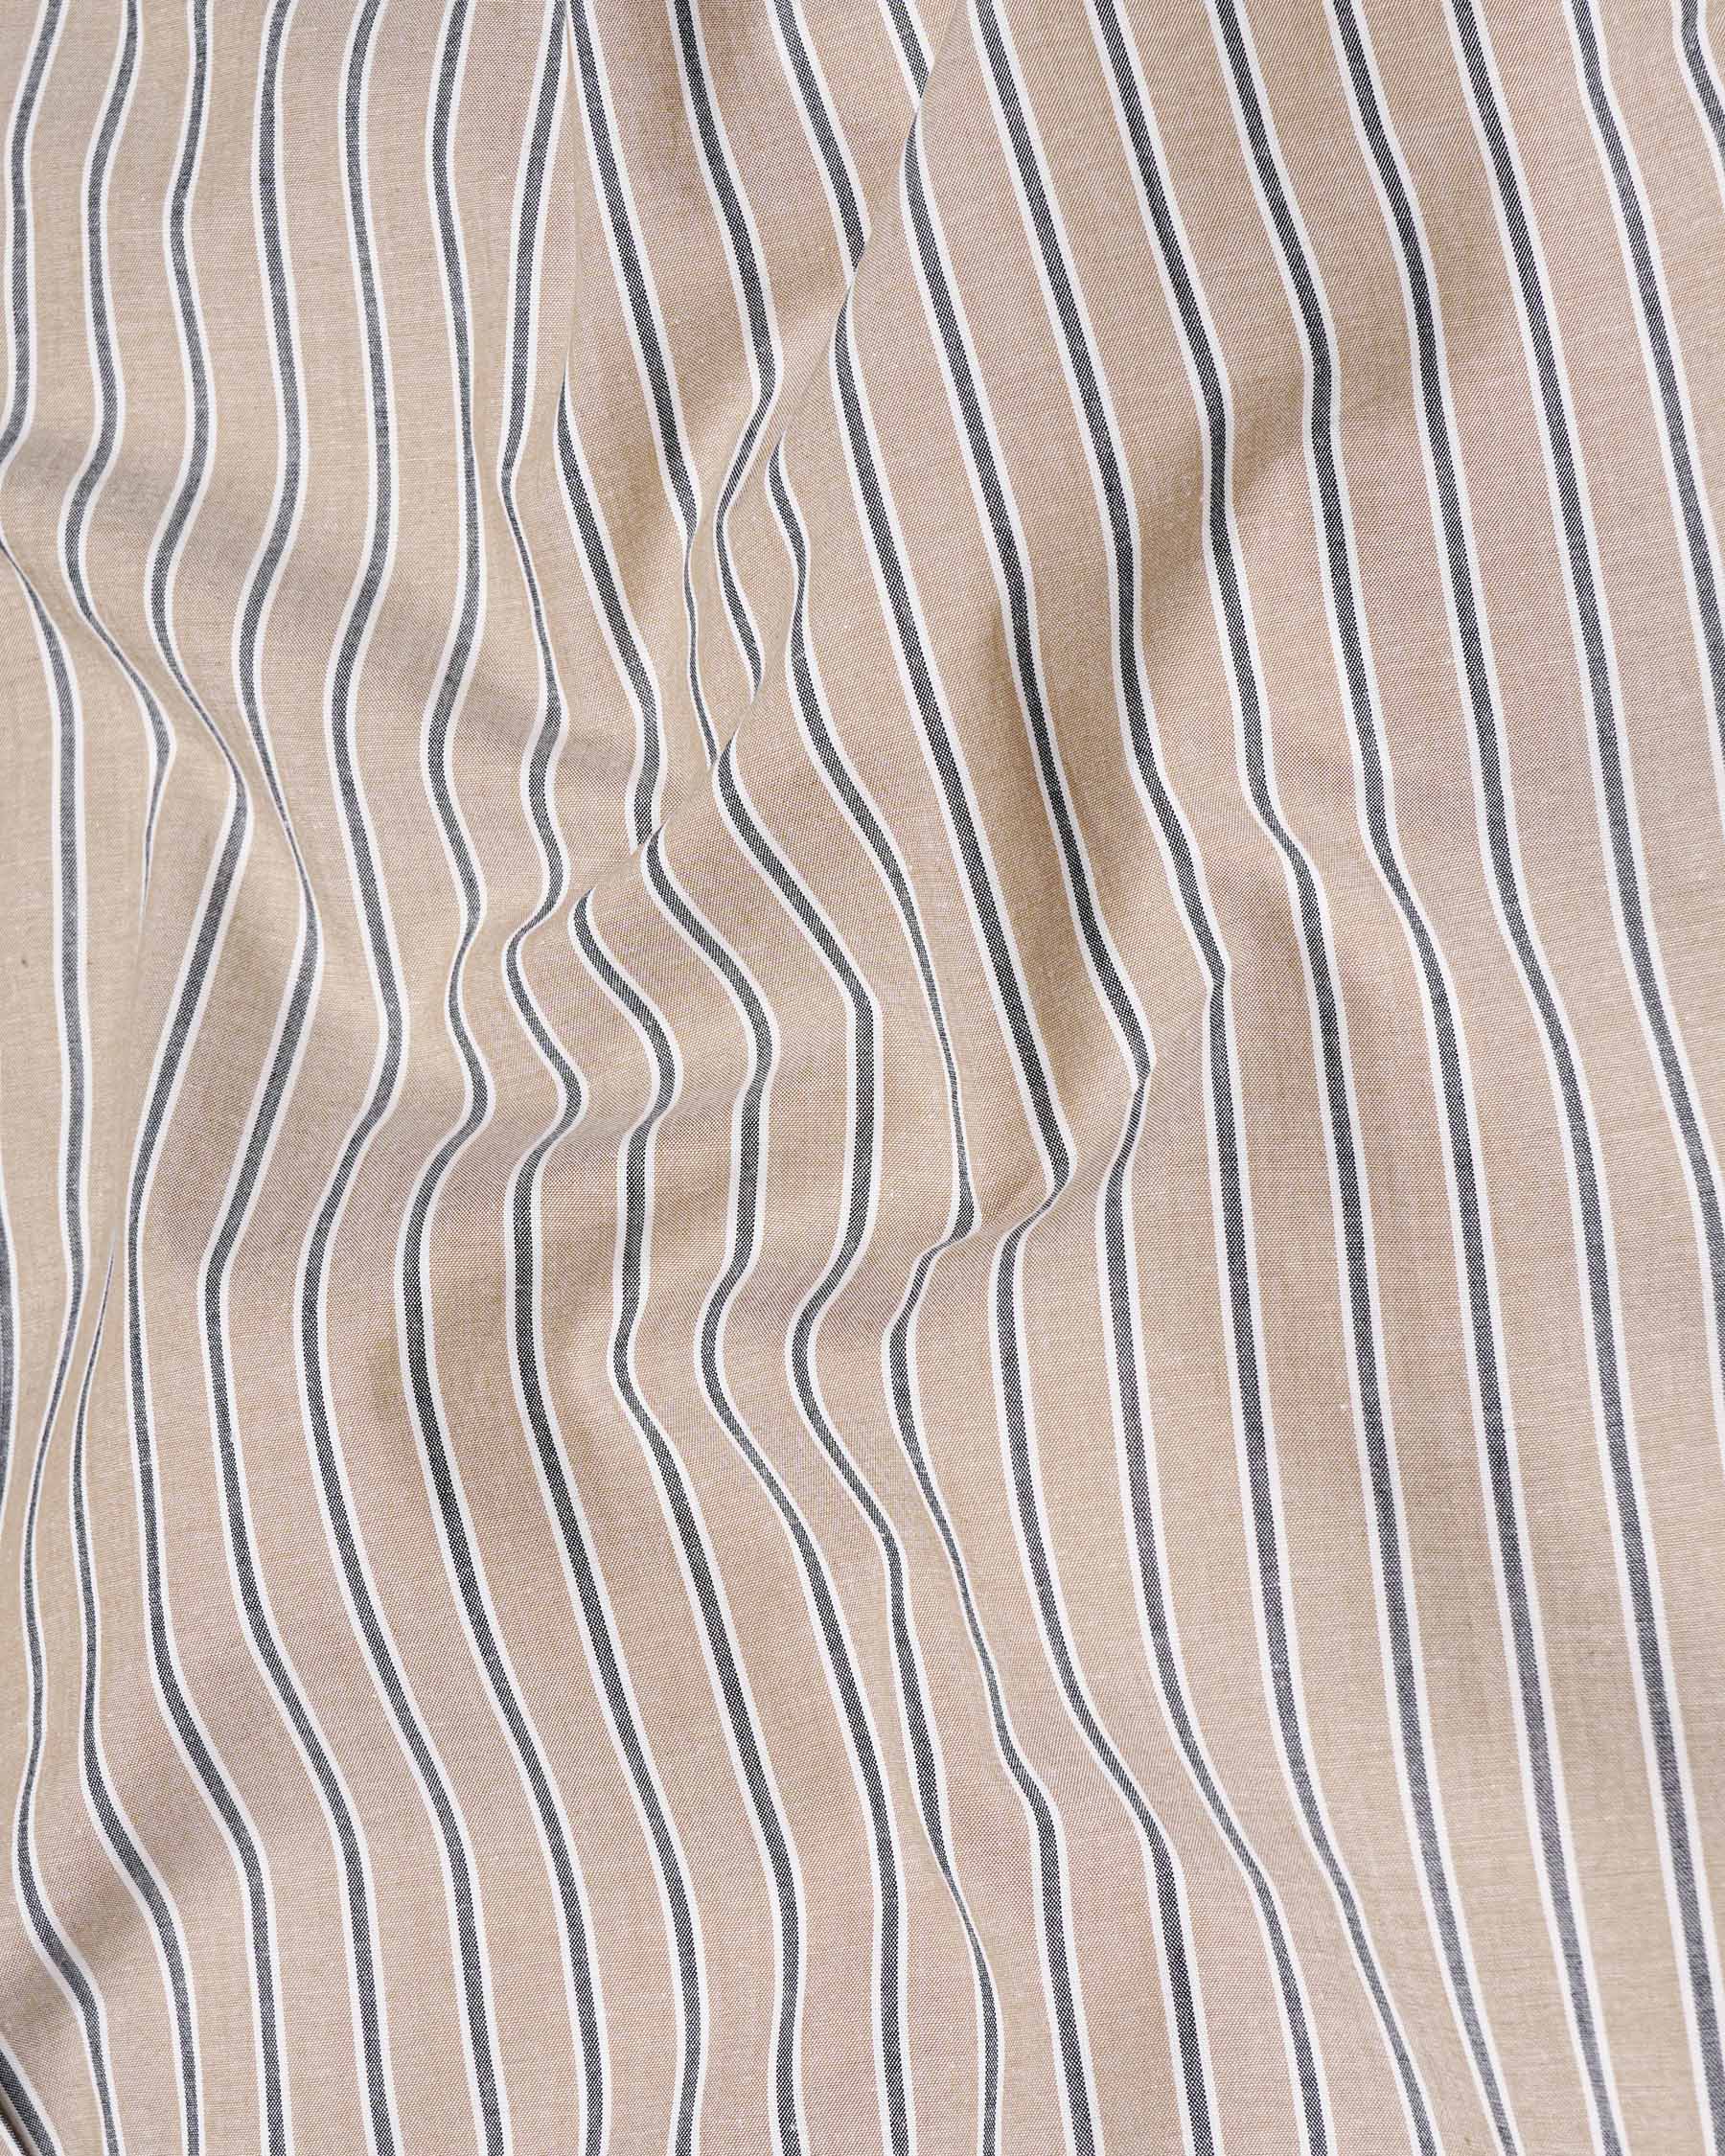 Eagle Brown Striped Premium Cotton Shirt